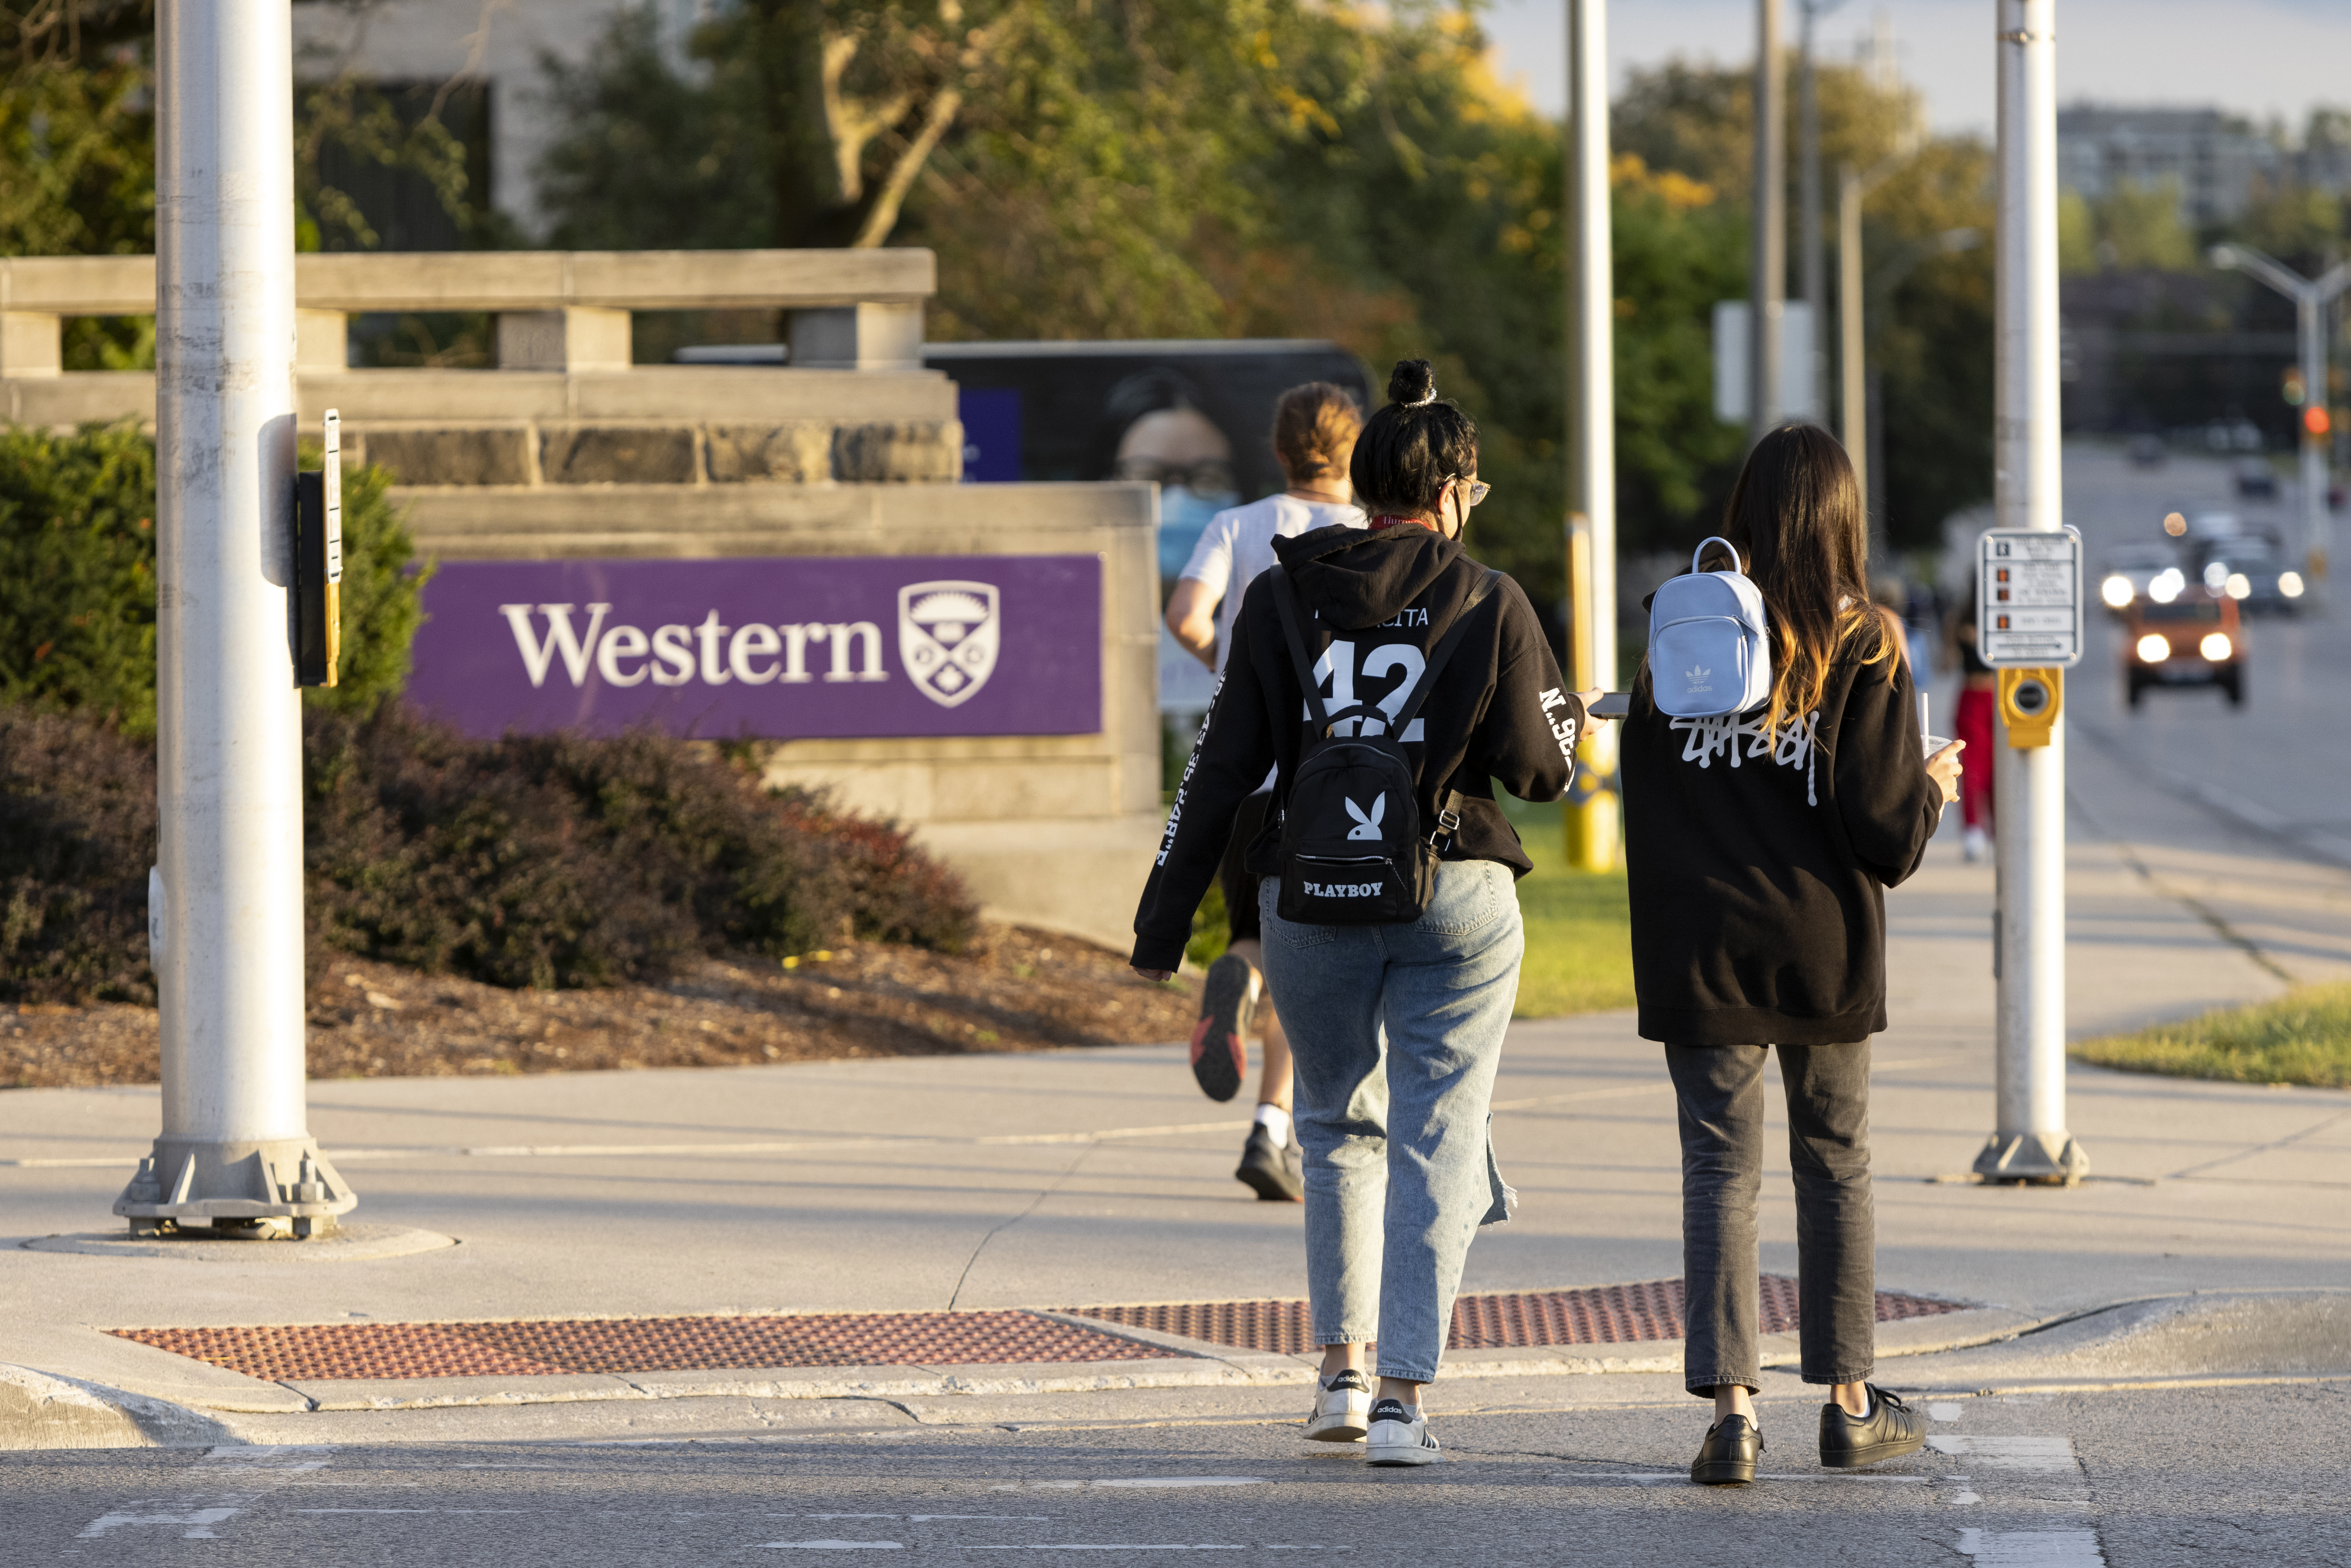 Tentative deal reached between Western University, union representing graduate TAs